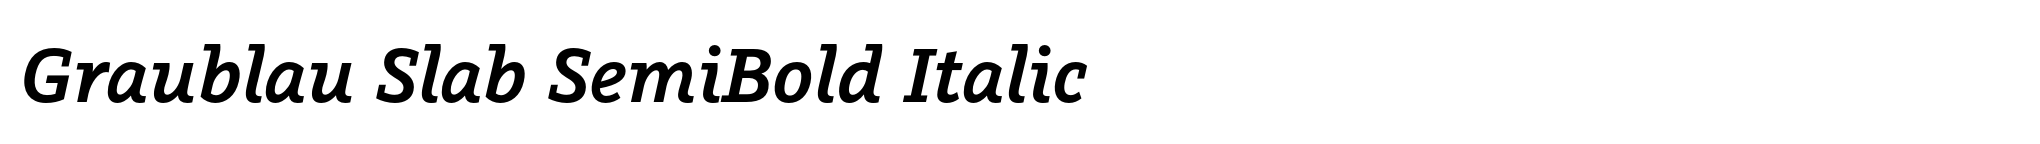 Graublau Slab SemiBold Italic image